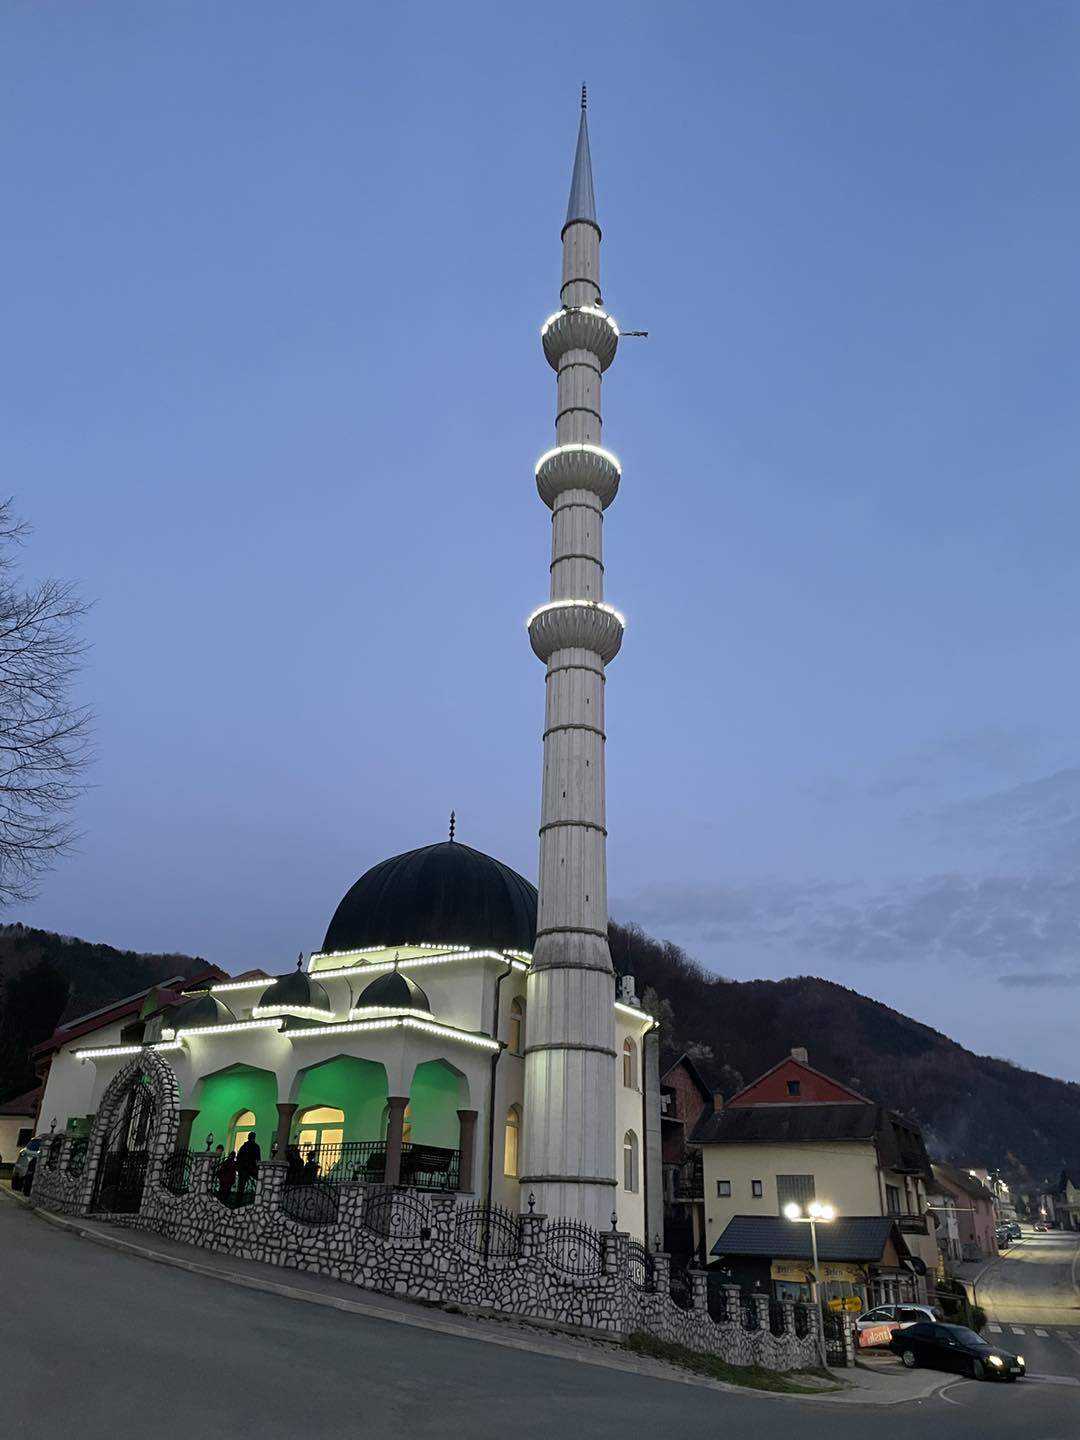 336906960_970588007689039_7357577329285629157_n.jpg - Ramazani u Srebrenici su posebni